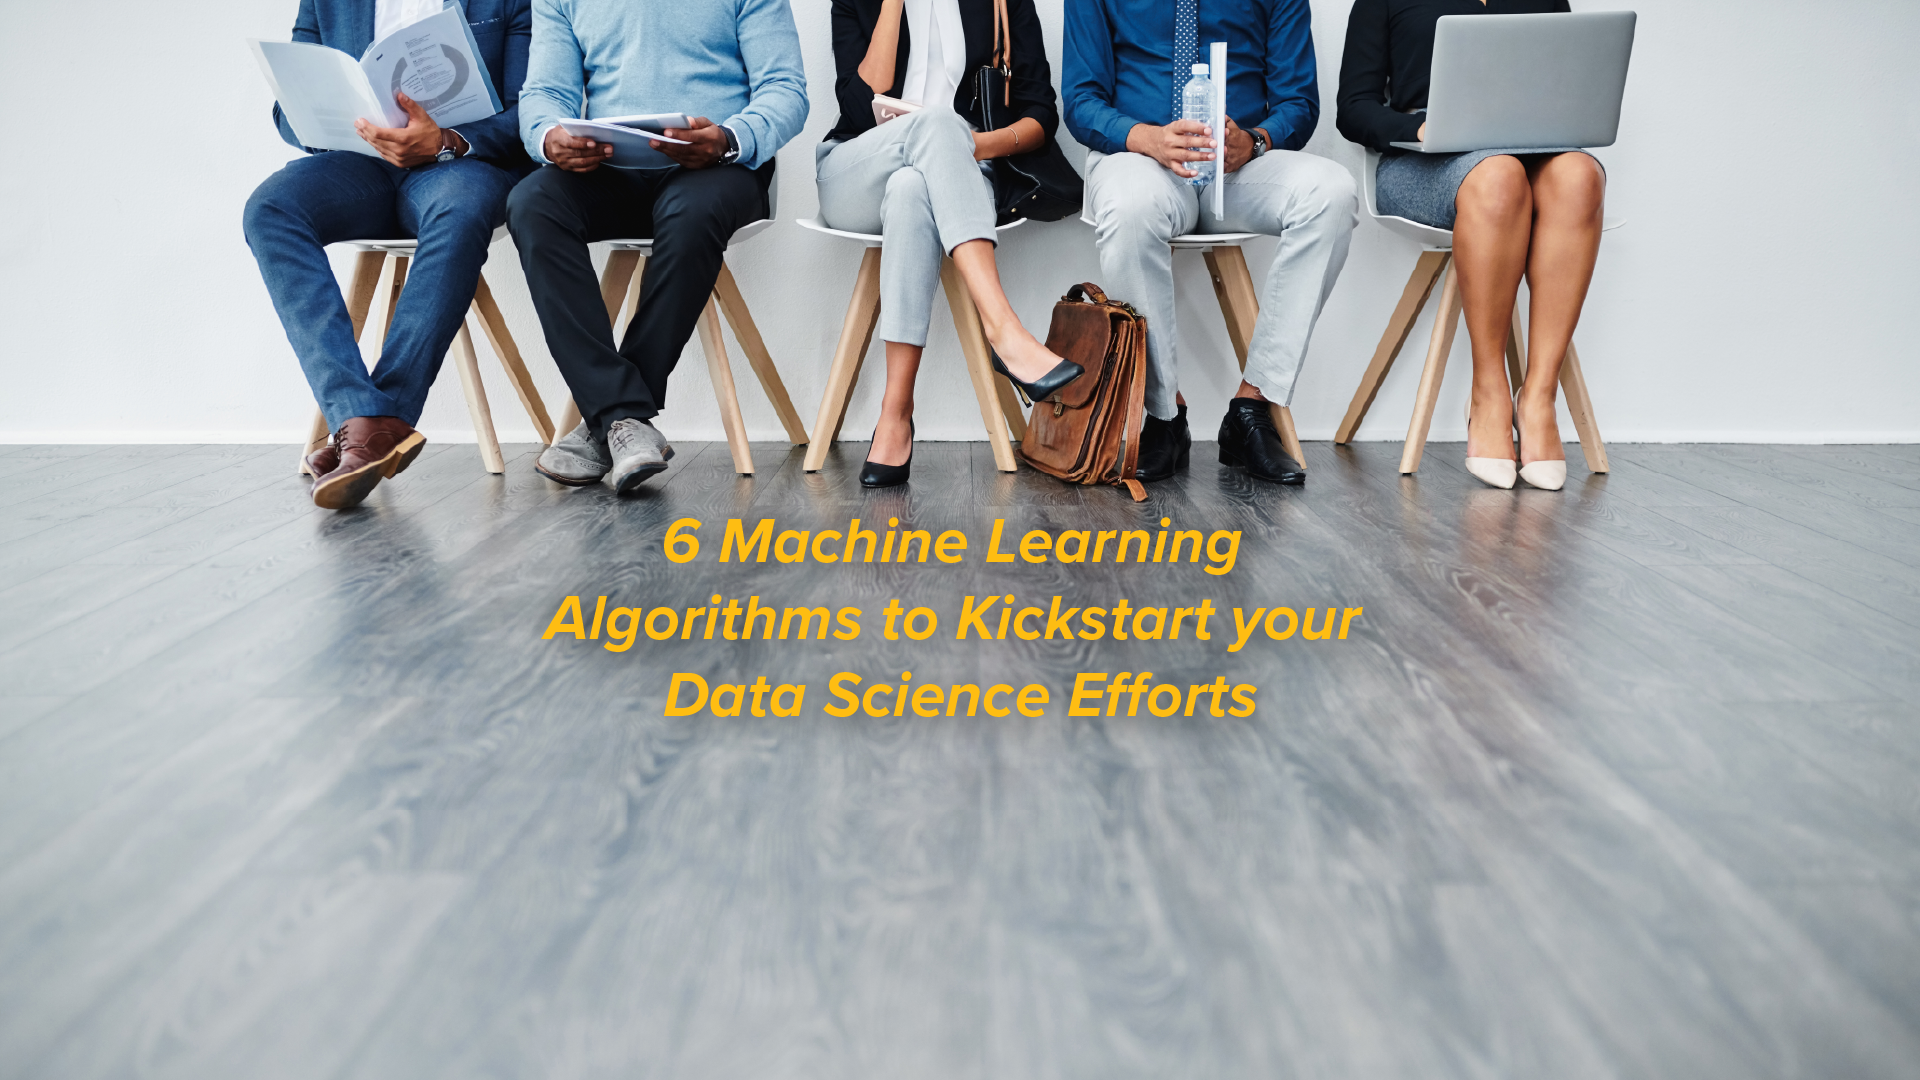 6 Popular Machine Learning Algorithms to Kickstart your Data Science Efforts